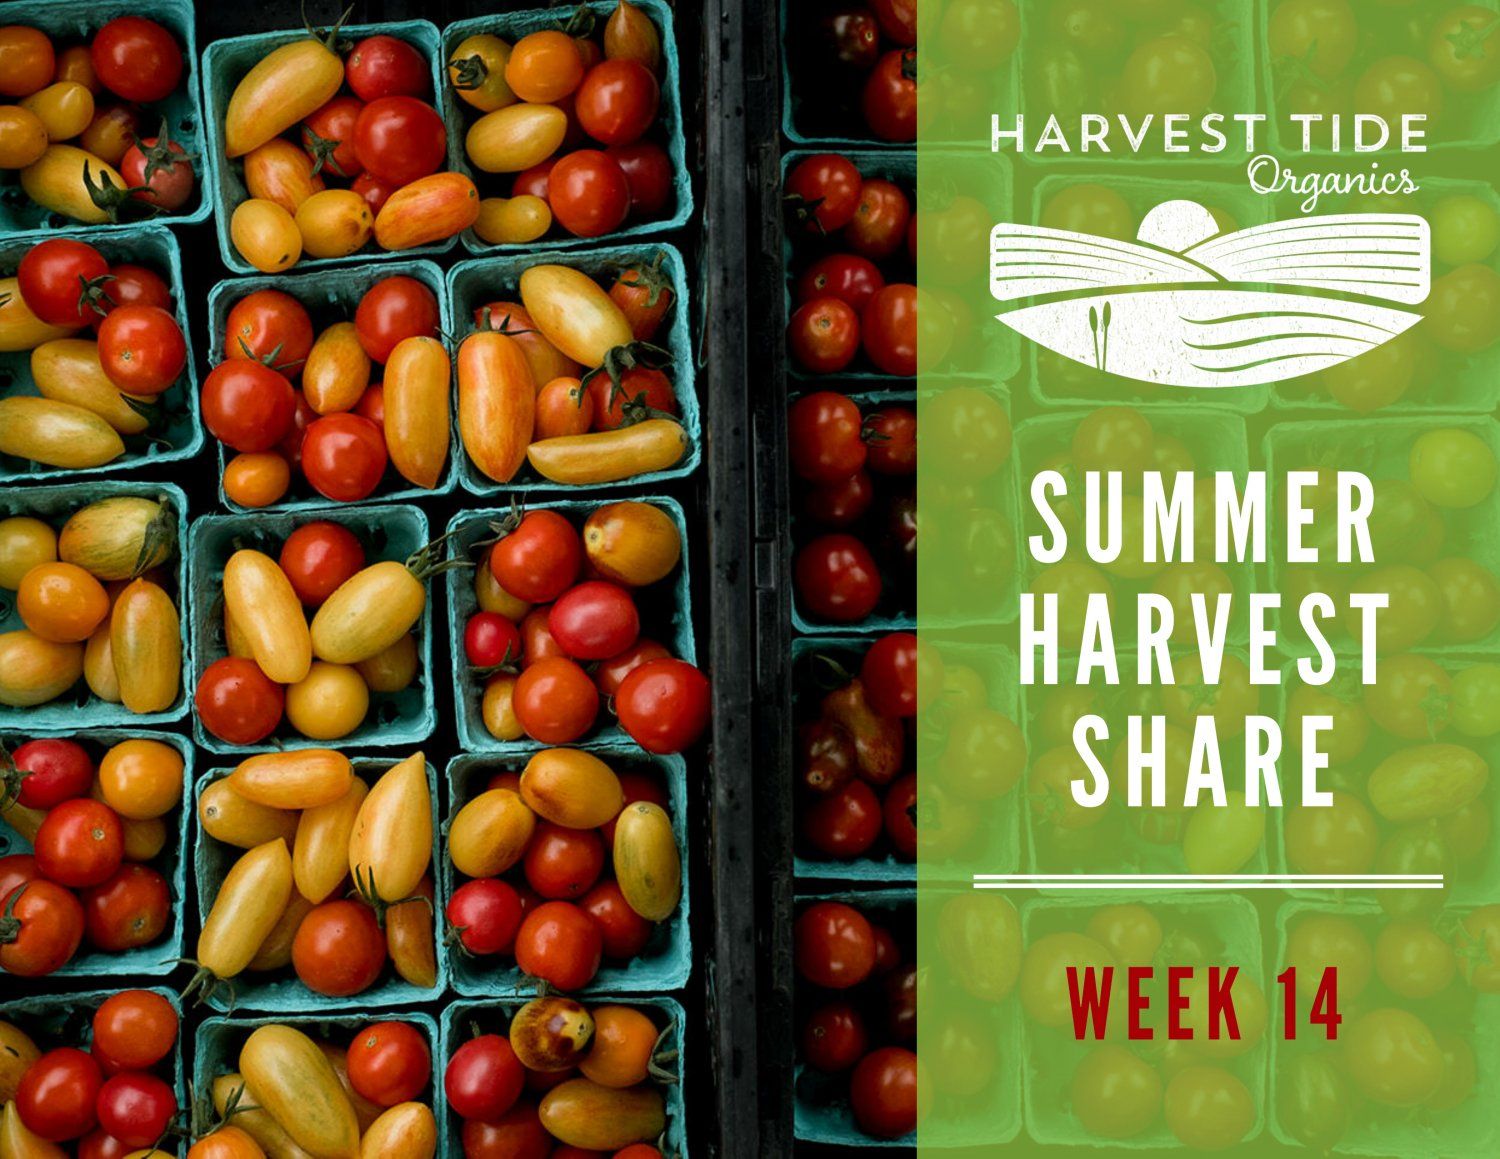 Next Happening: Summer Harvest Share - Week 14